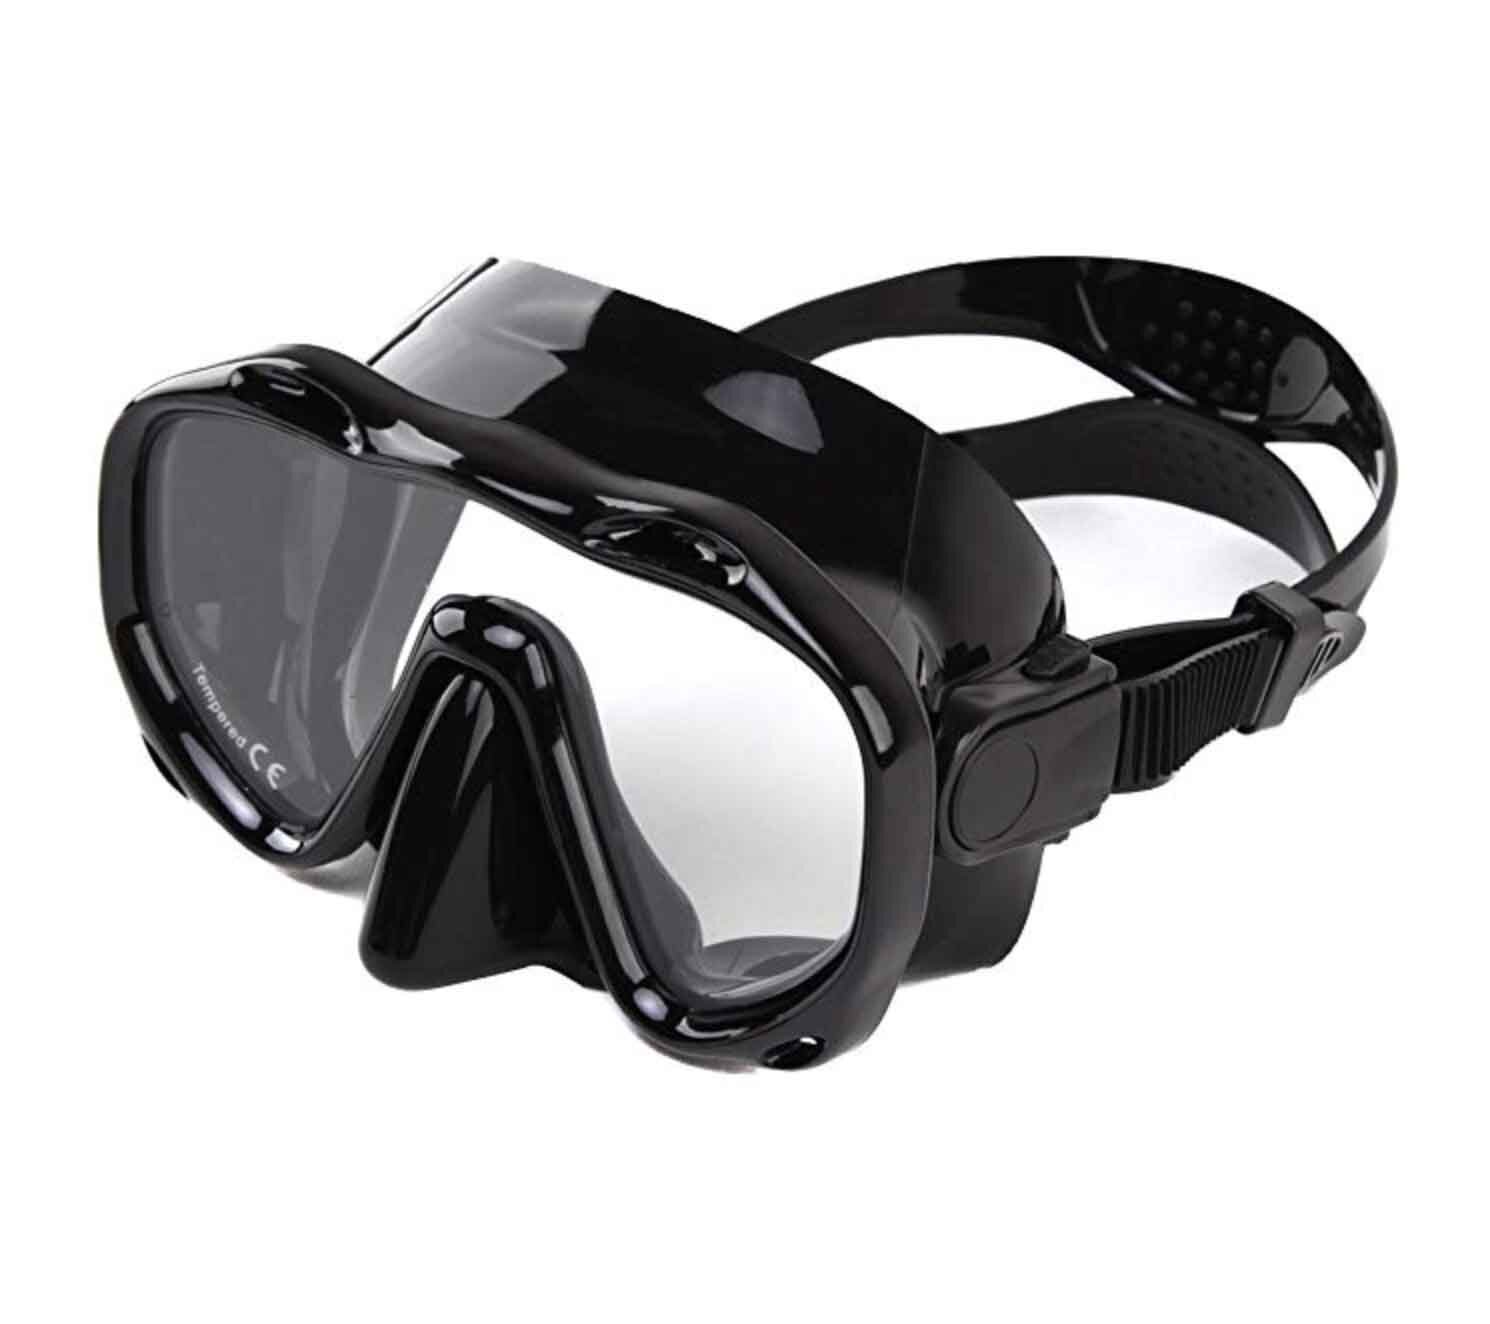 Best Scuba Diving Masks